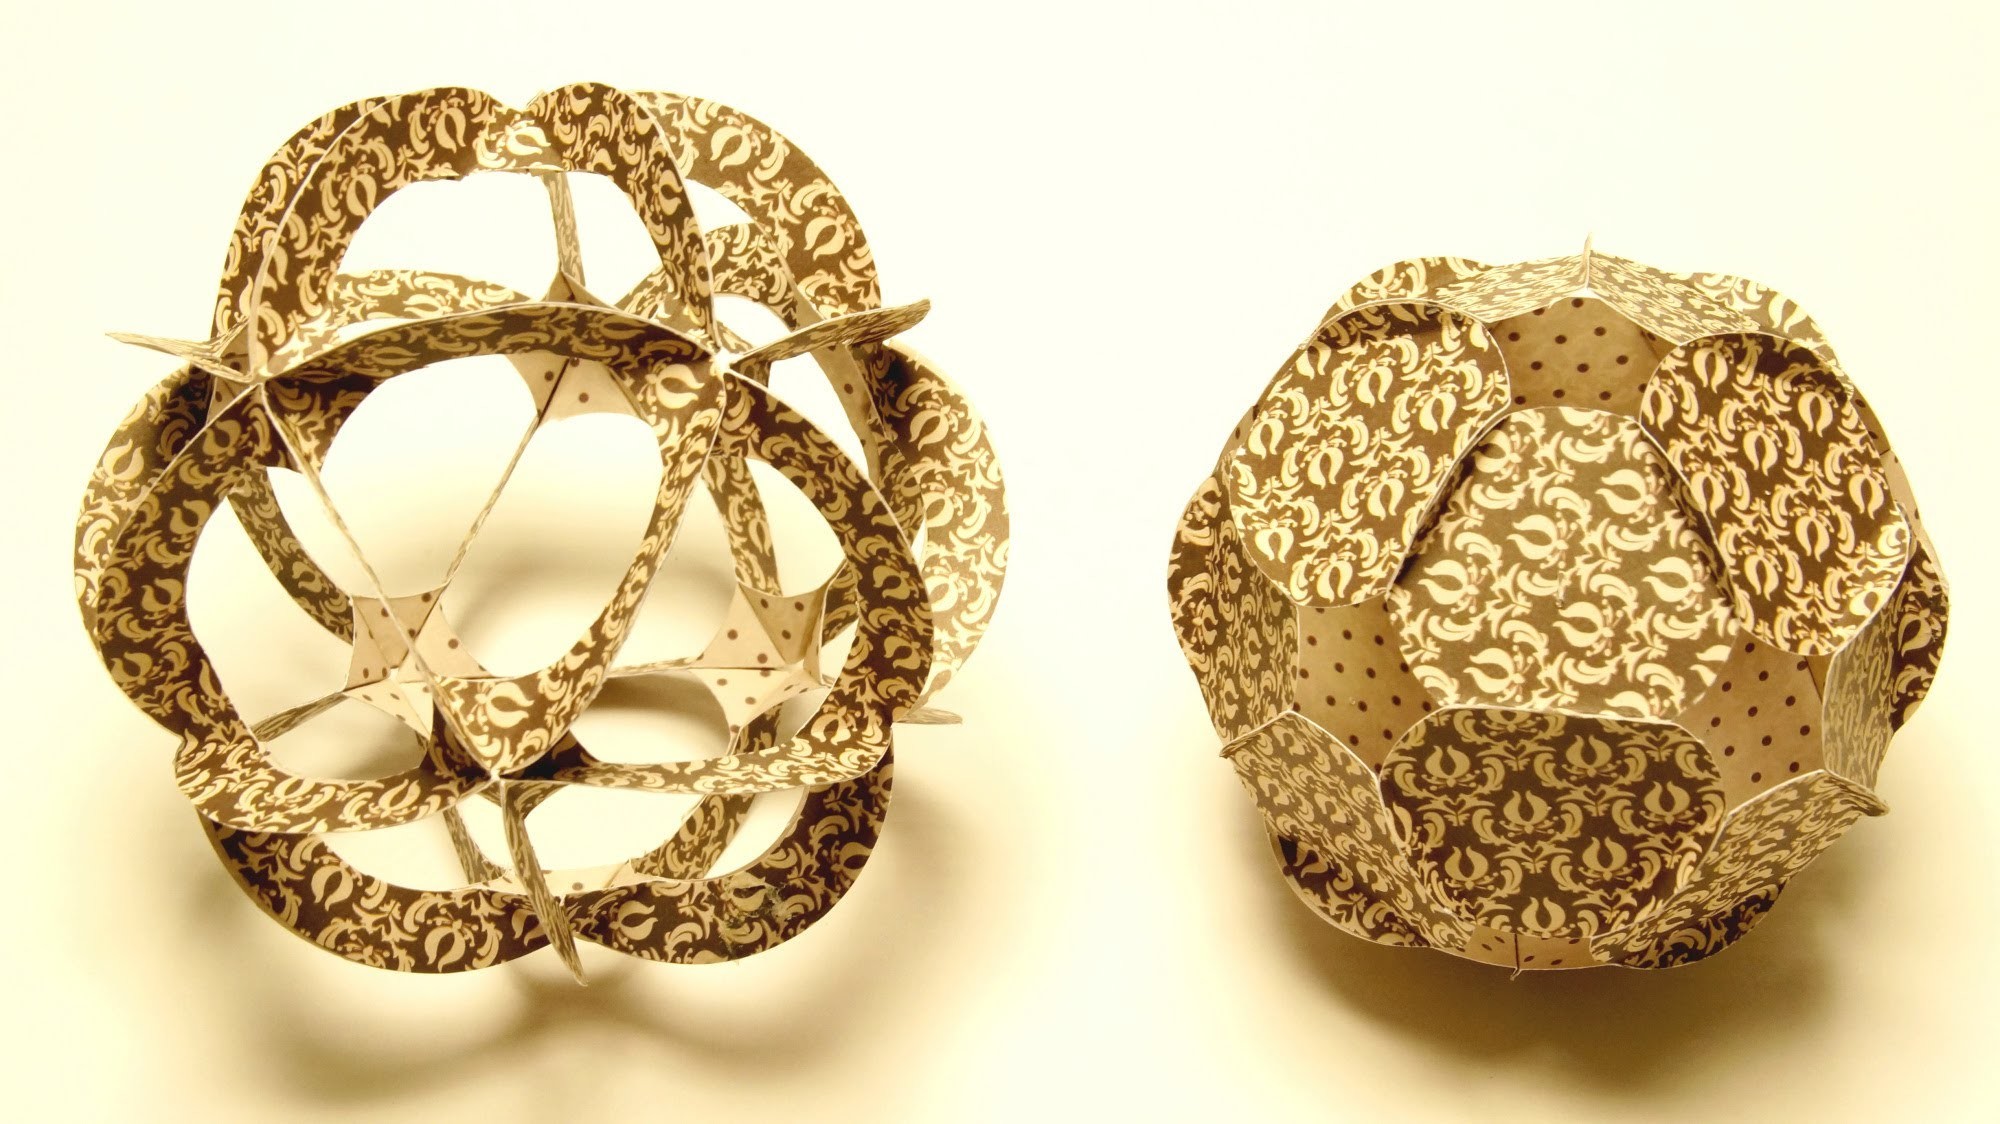 Basteln mit Papier: Paper Ball basteln aus Papier-Ornamenten. 